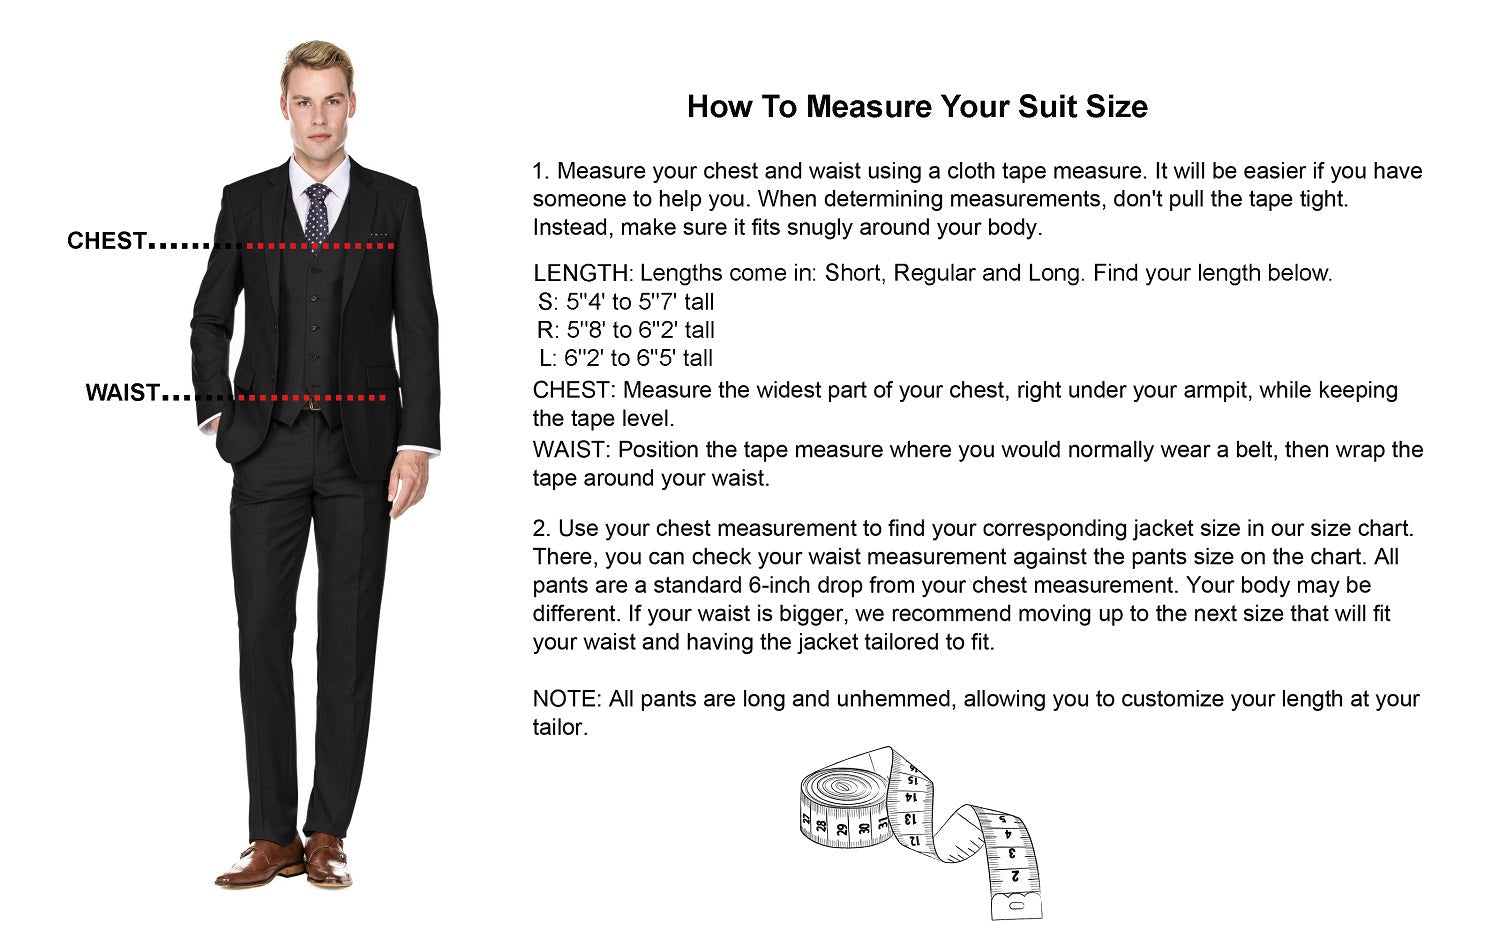 Indigo Model Men's 2 Piece Suit